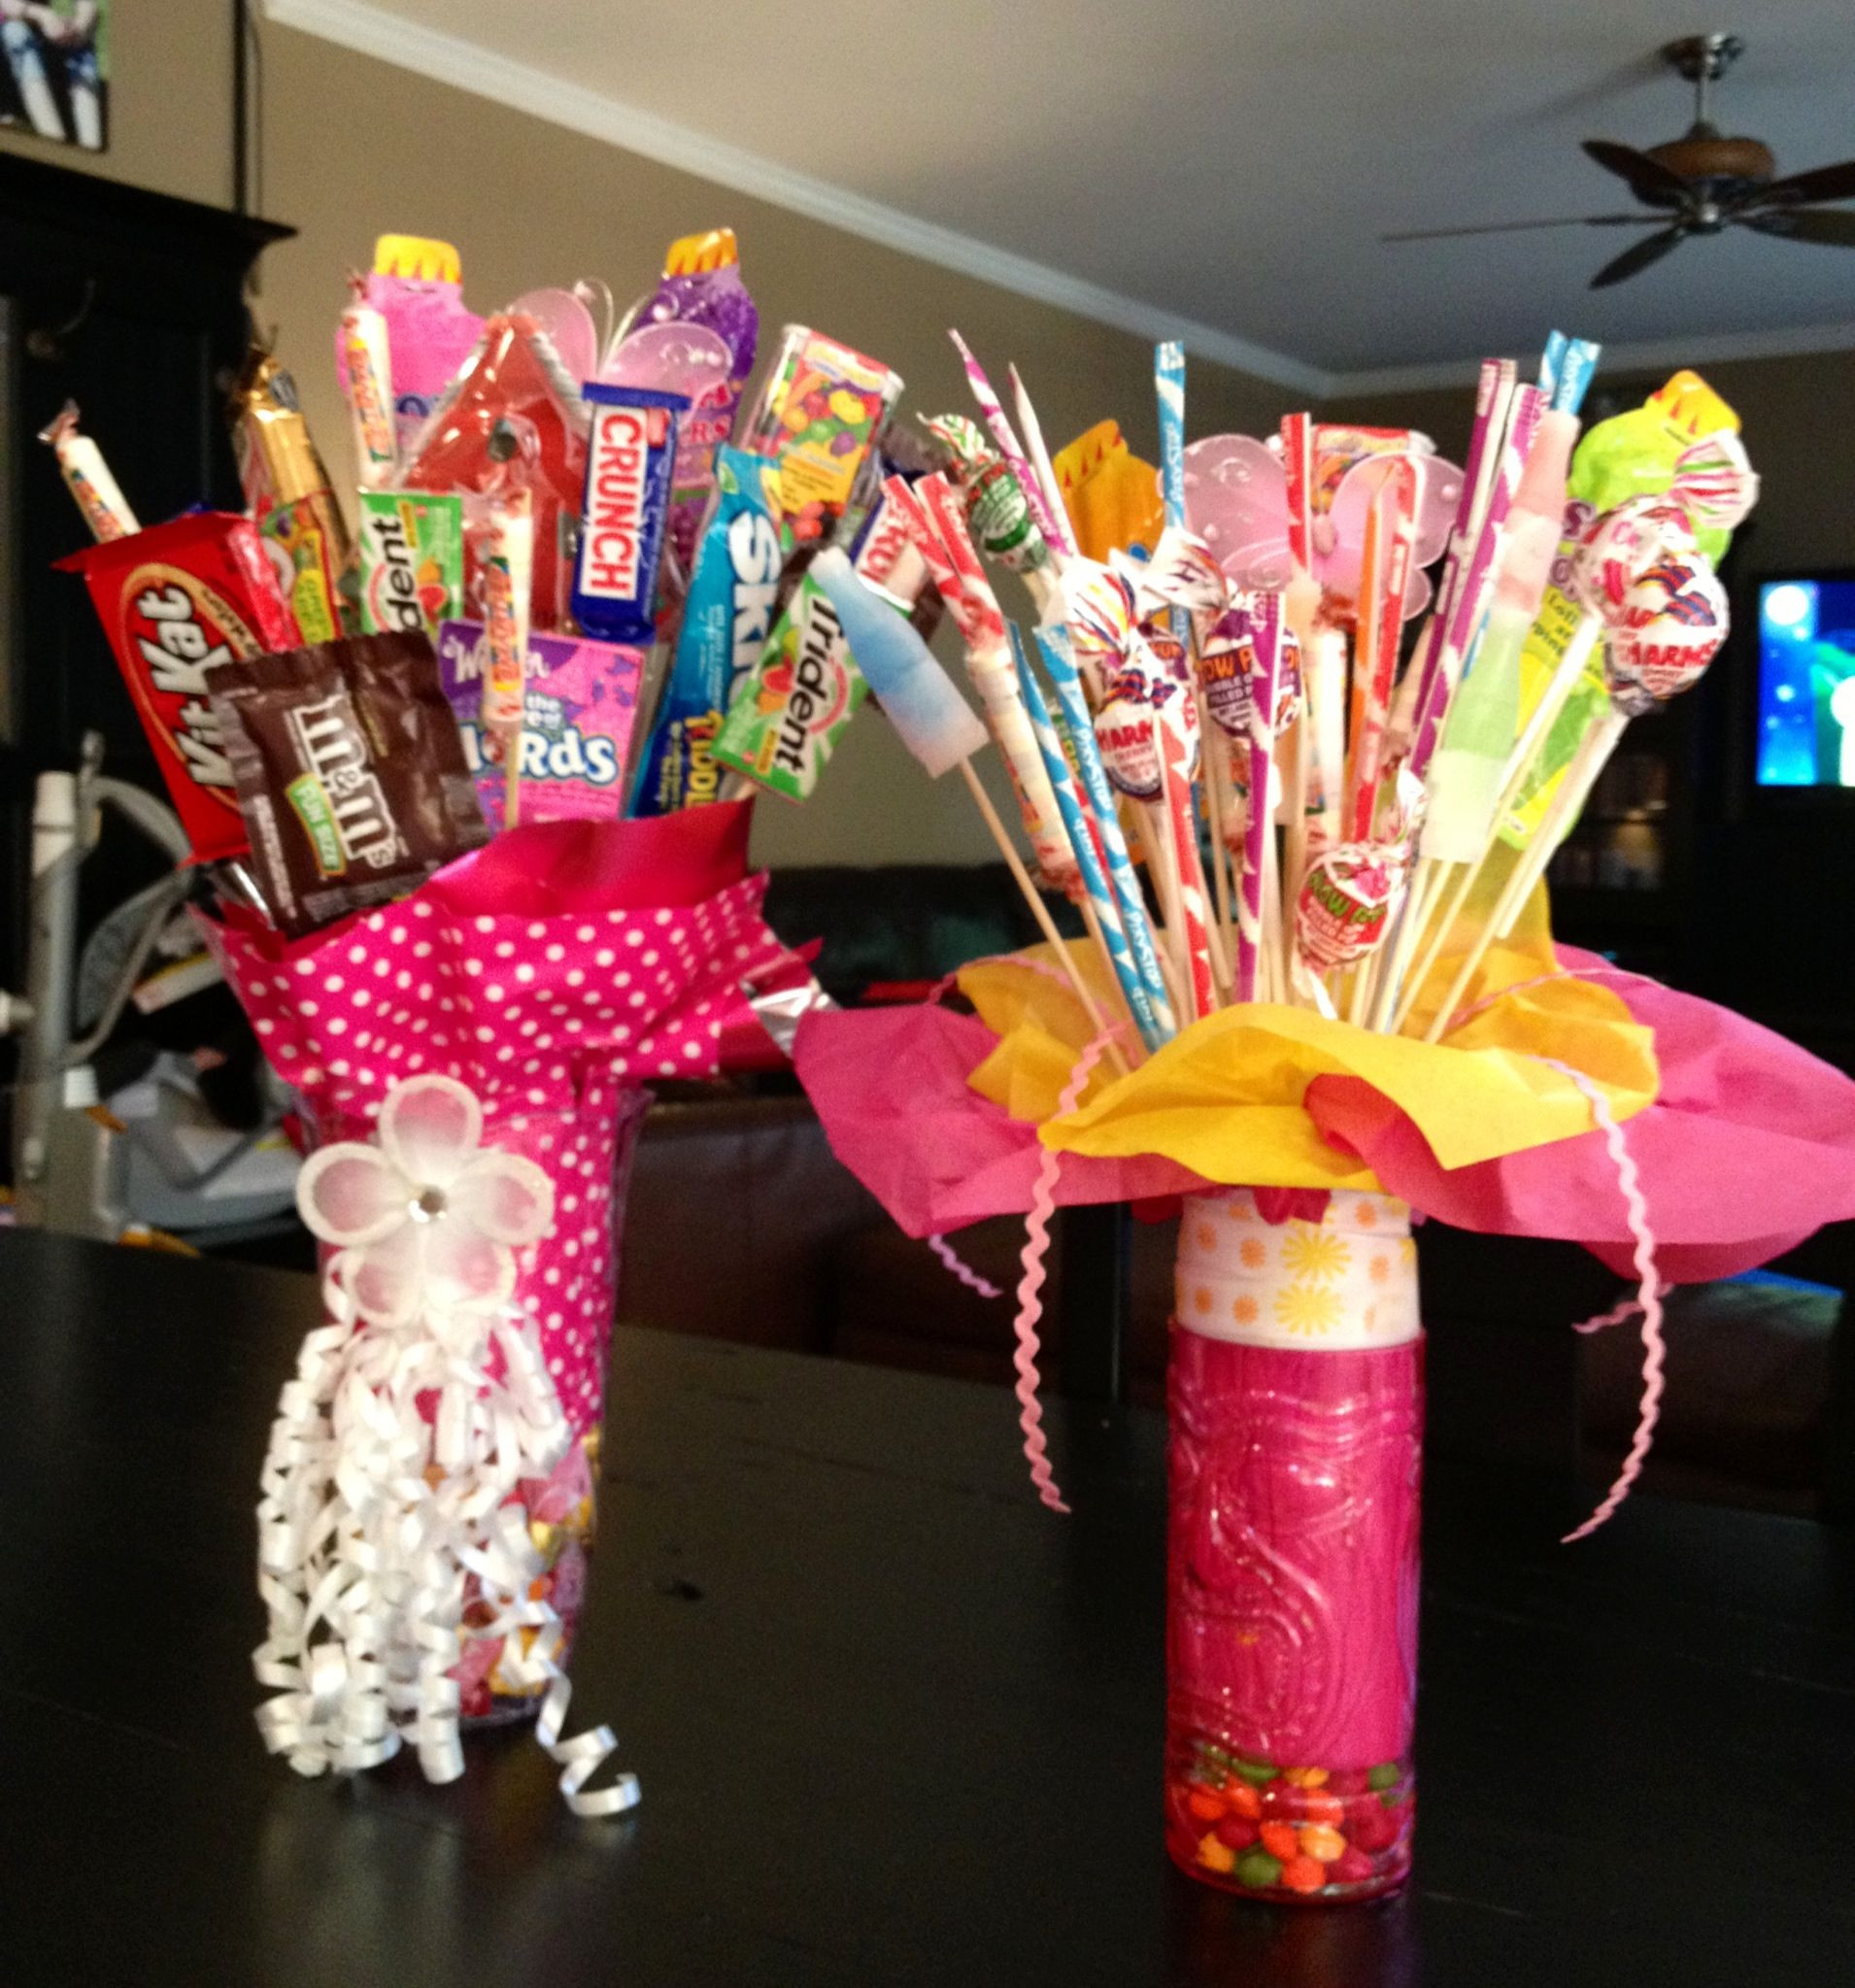 5Th Grade Graduation Gift Ideas For Boys
 Candy bouquets for 5th grade graduation Idea for Riley